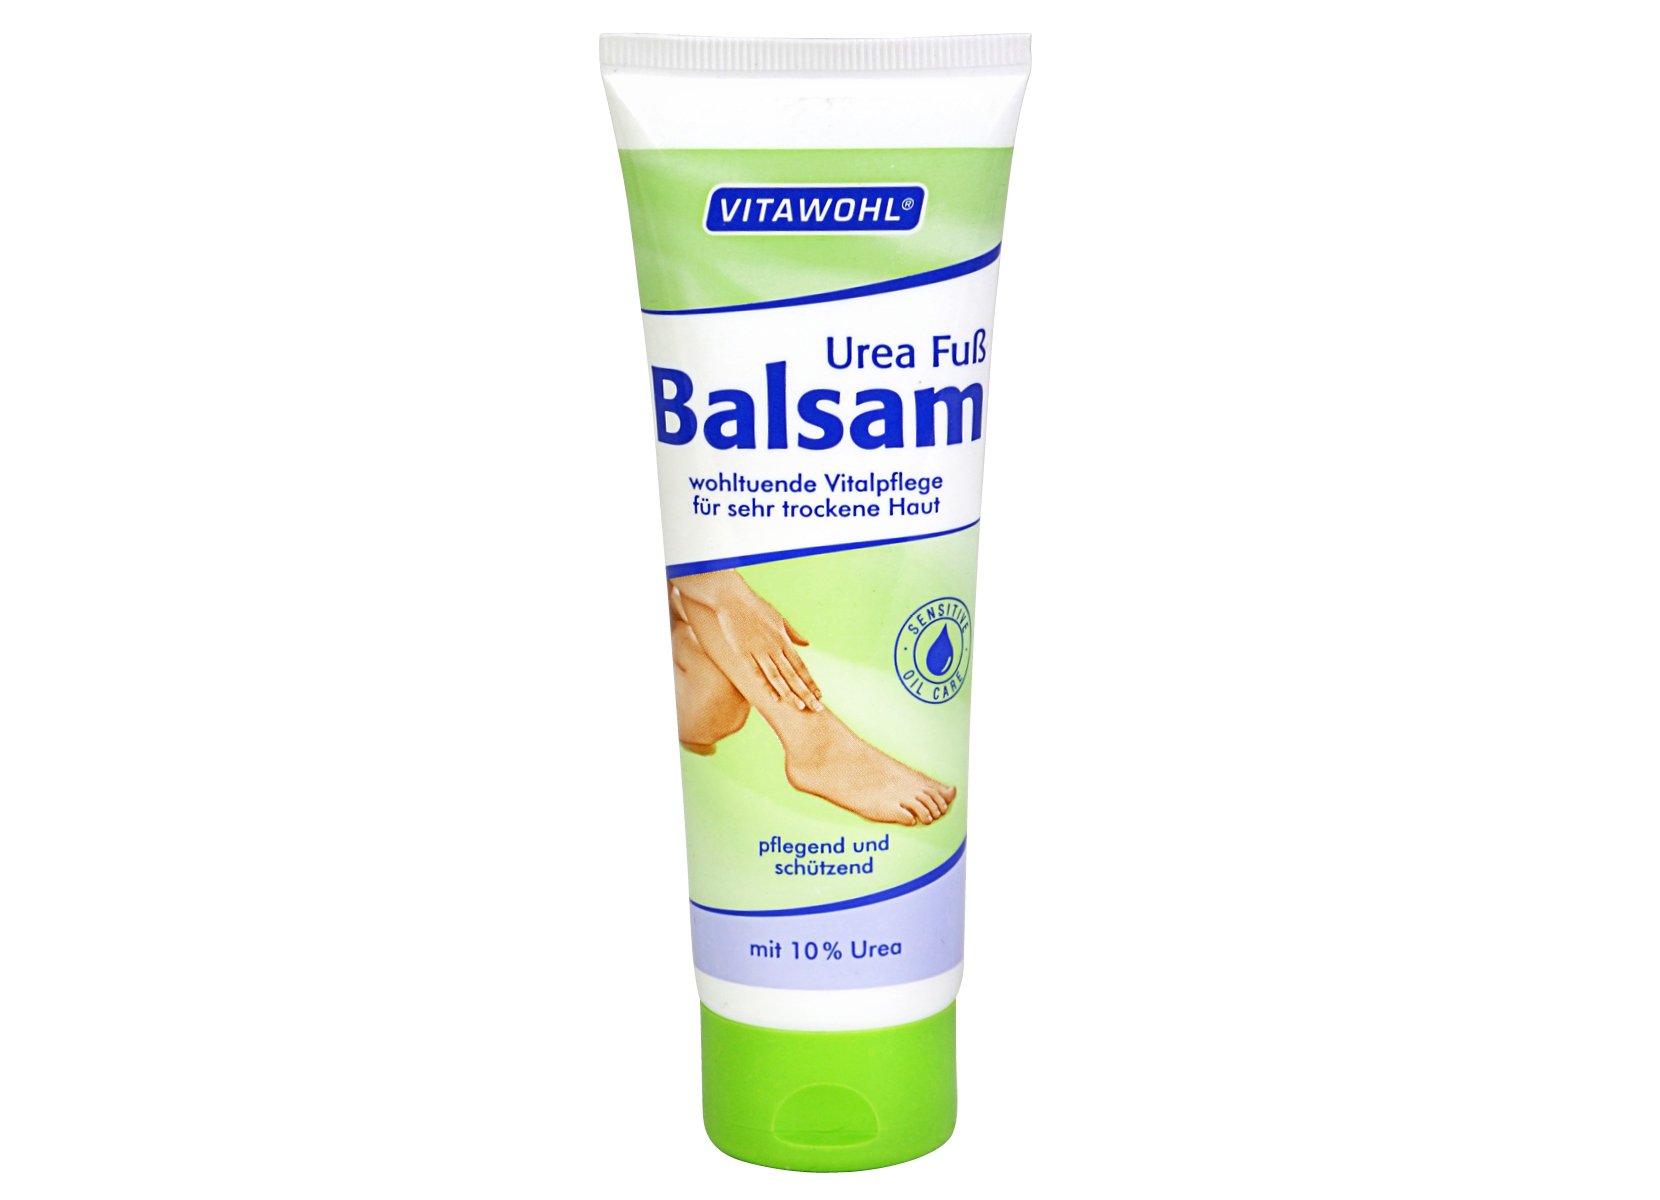 Urea-Fuß-Balsam